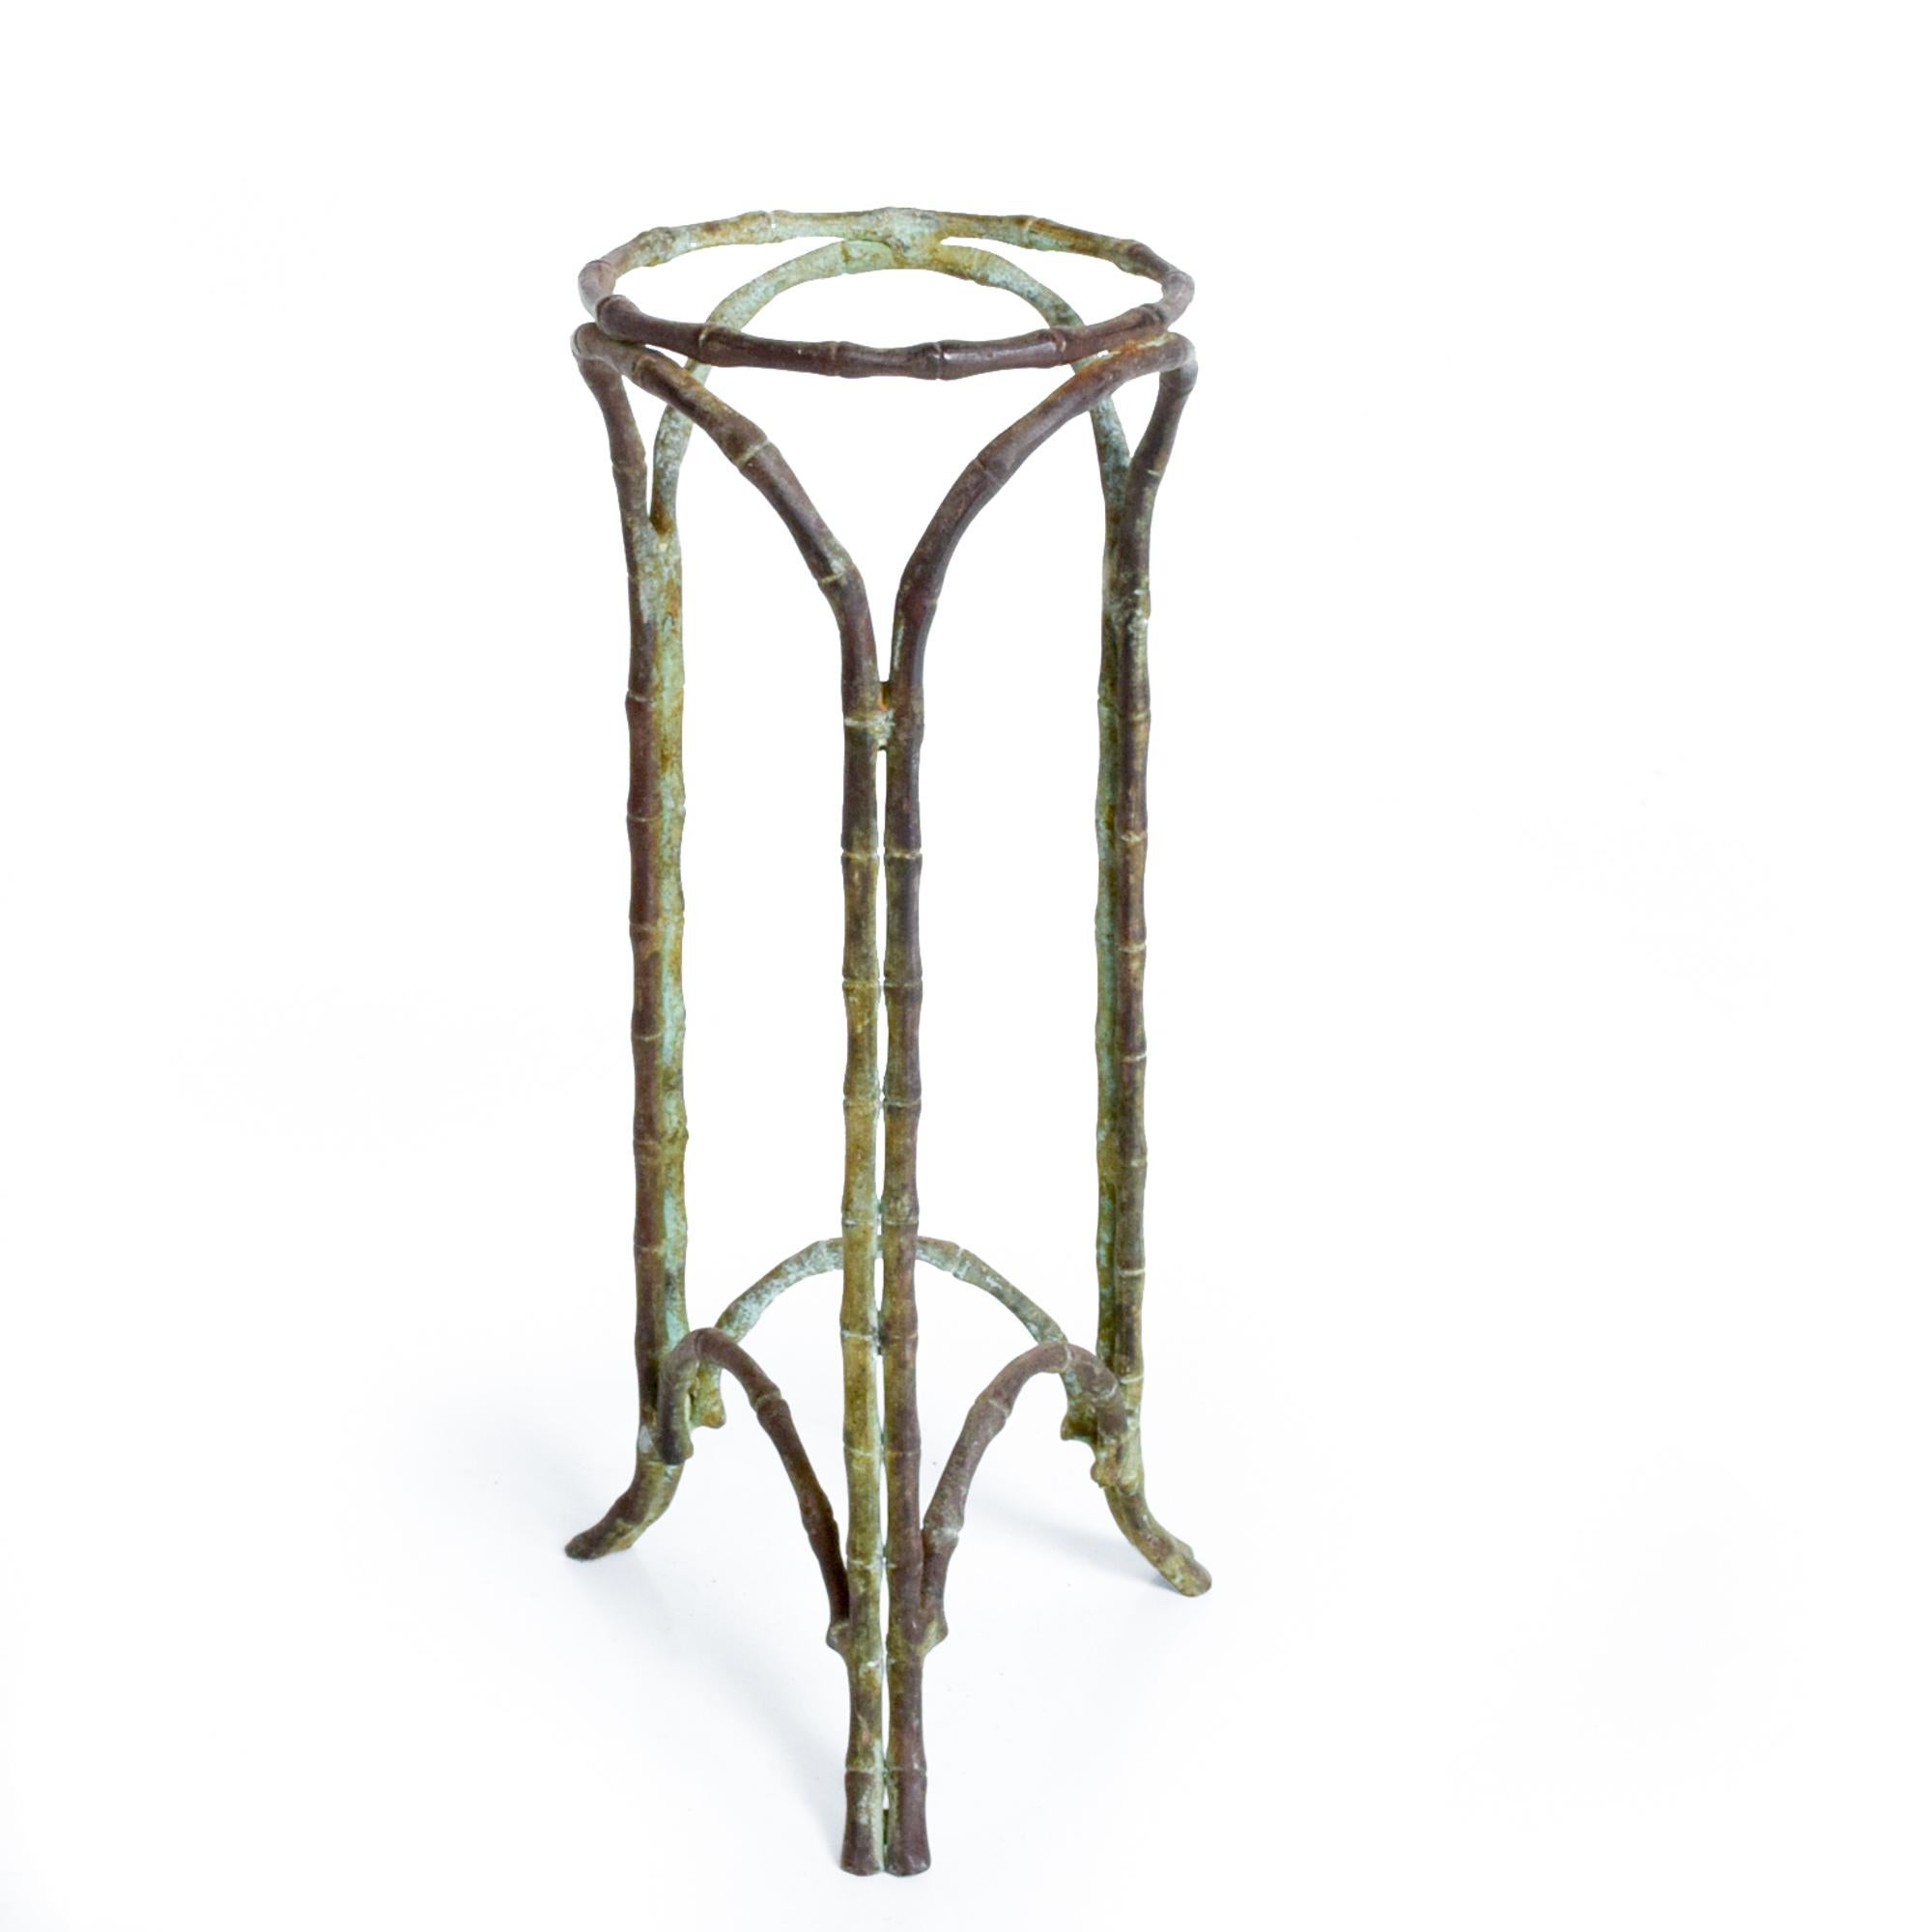 Regal Regency Faux Bamboo Pedestal Vase Stand Garden Planter in Bronze Verdigris 1